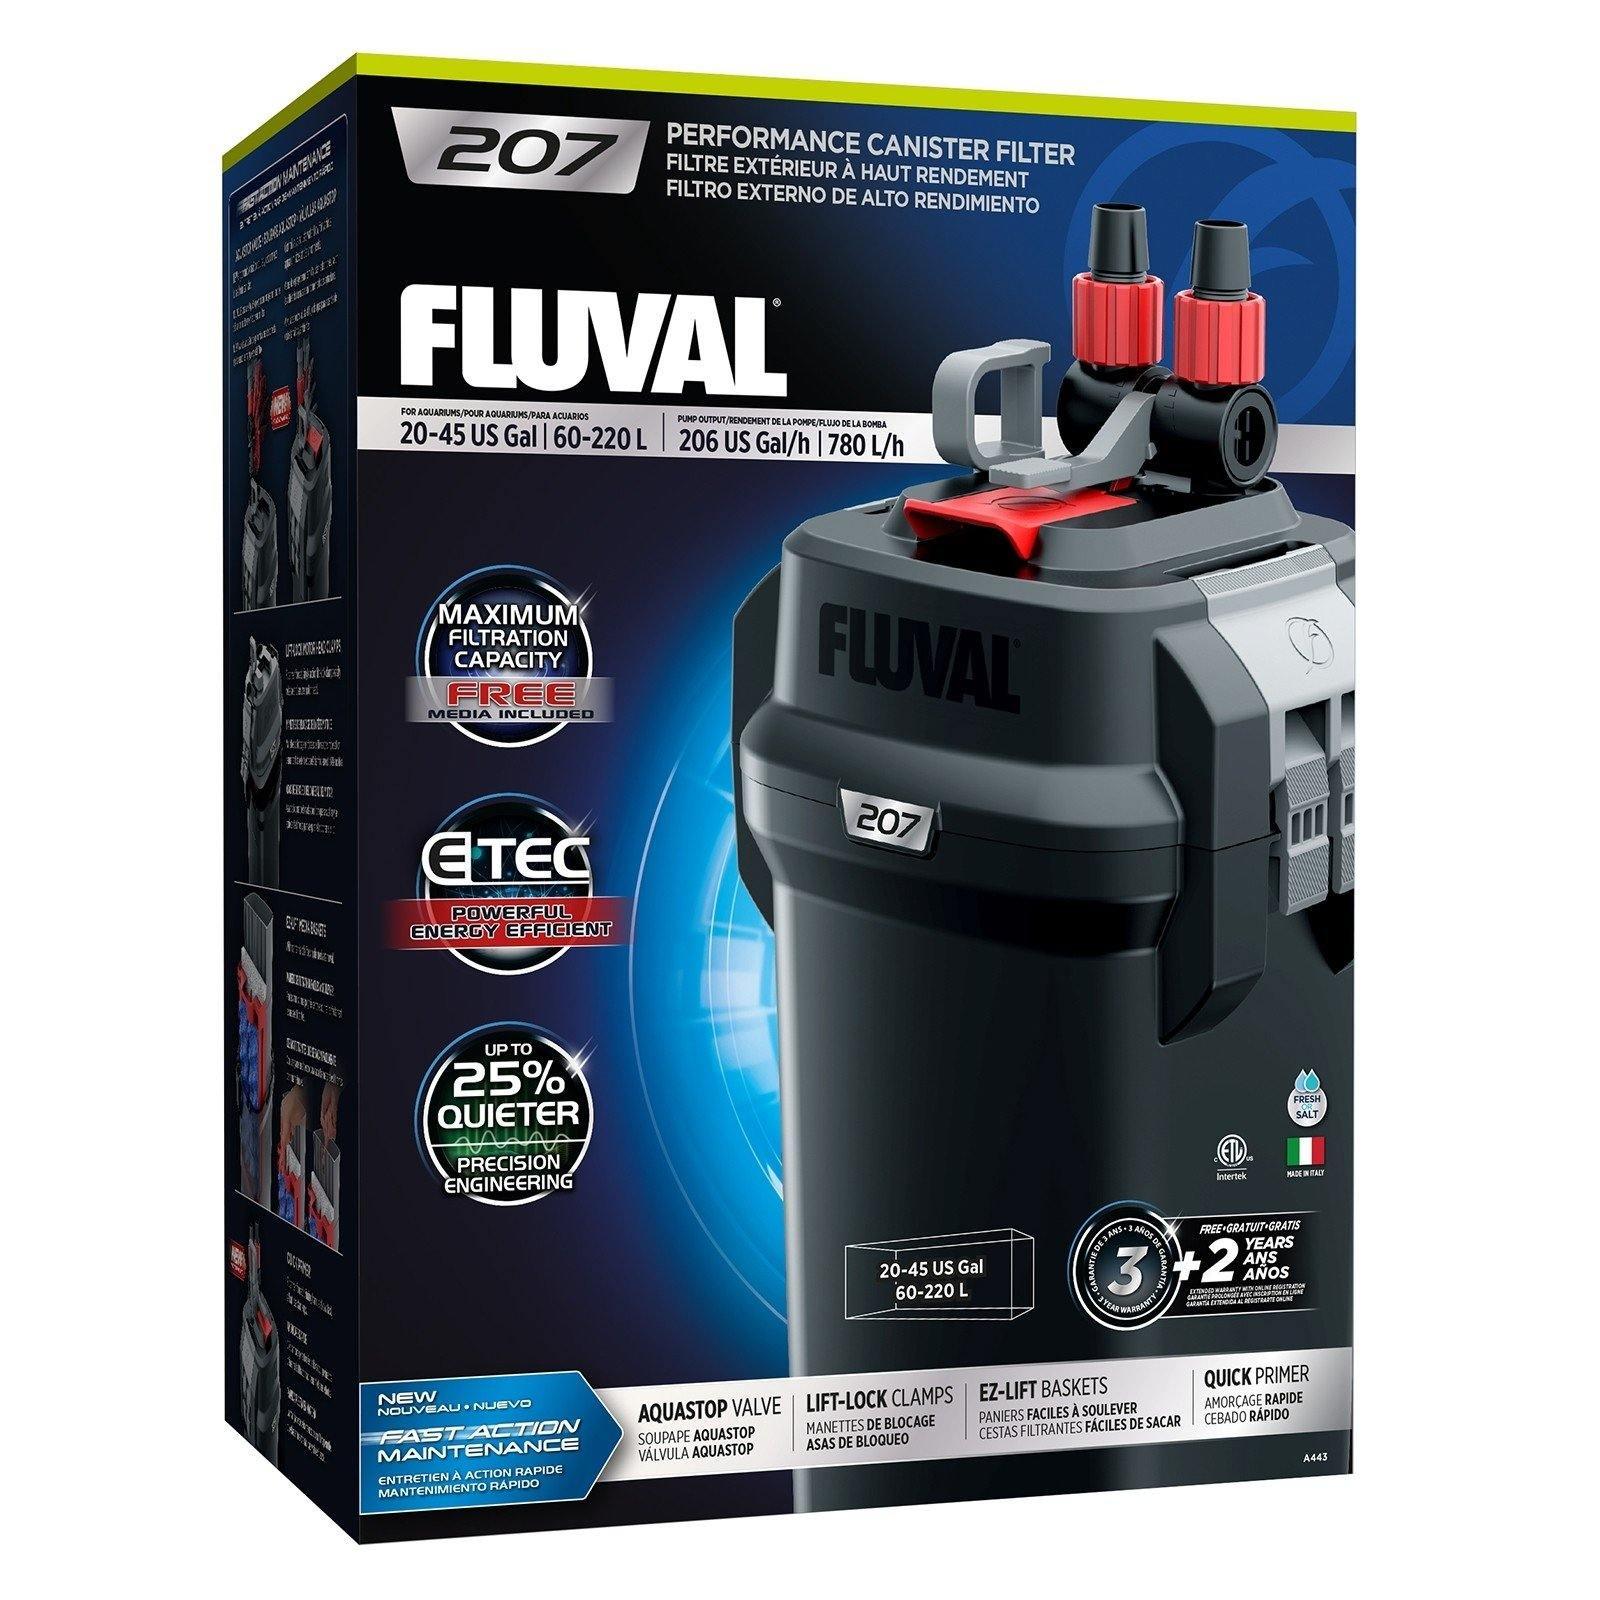 Fluval 207 Aquarium Canister Filter with Free Phosphate Pad - Amazing Amazon